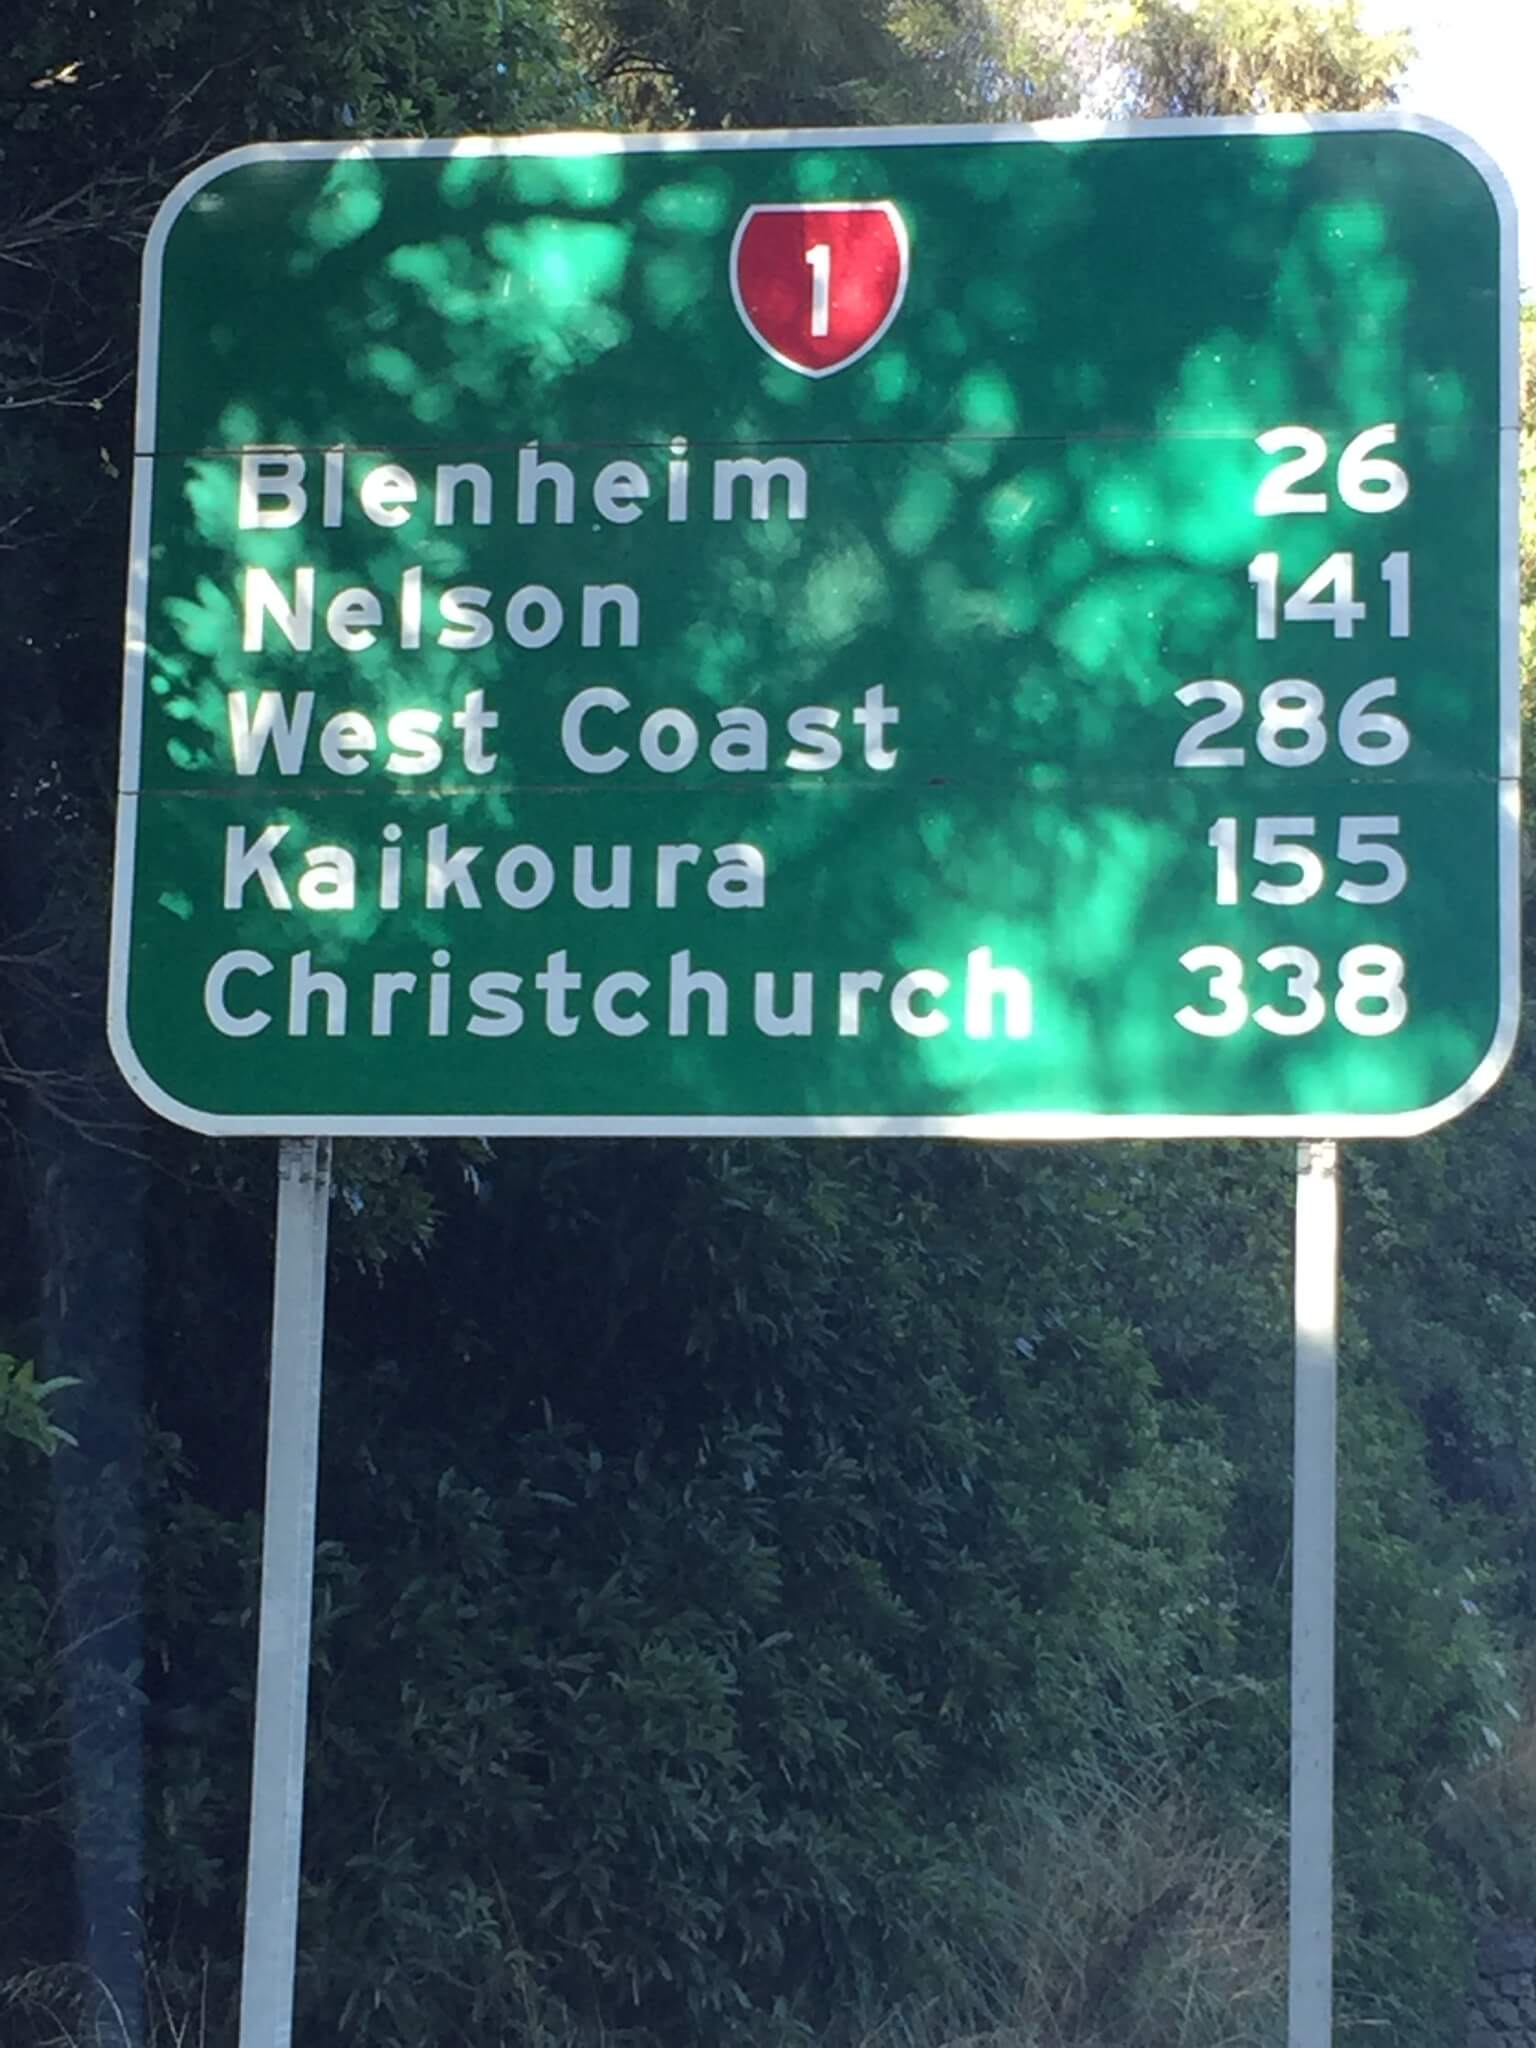 338km to Christchurch